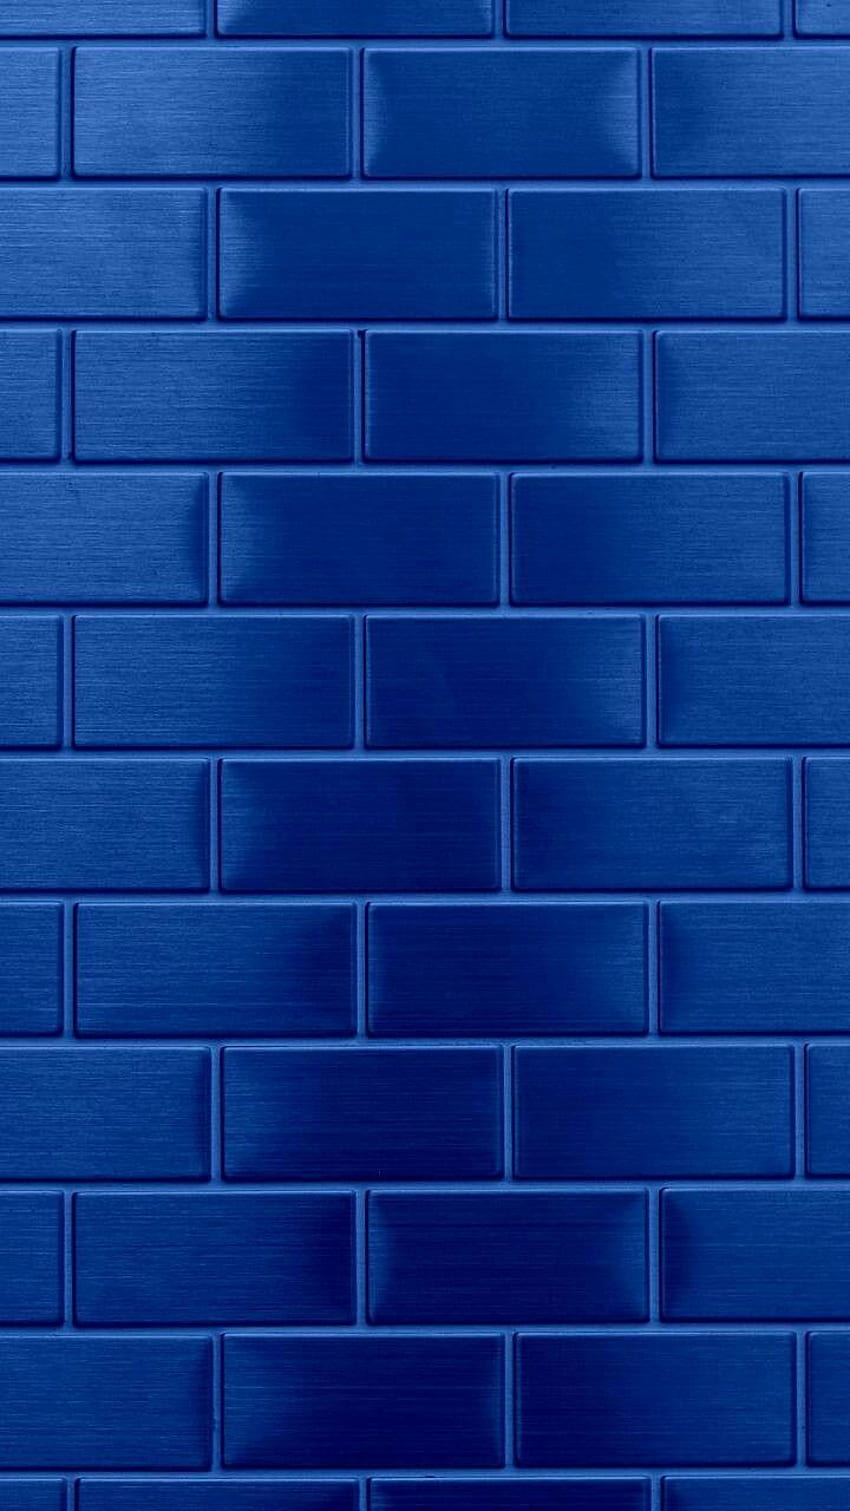 Wallpapers Azul em 4k - Wallpaper 4k